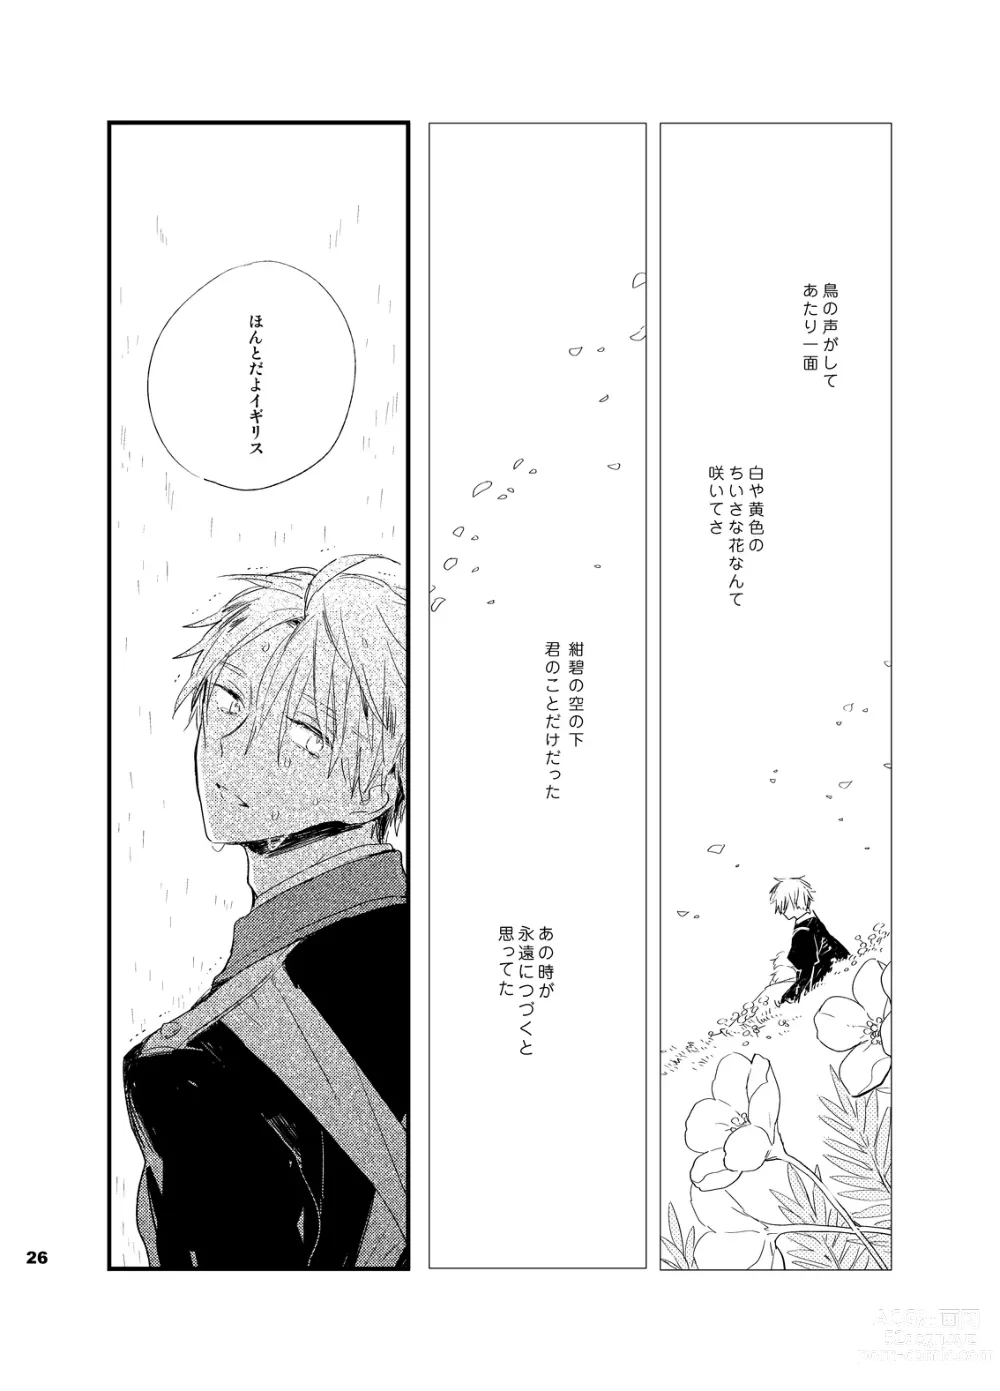 Page 25 of doujinshi REDLINE